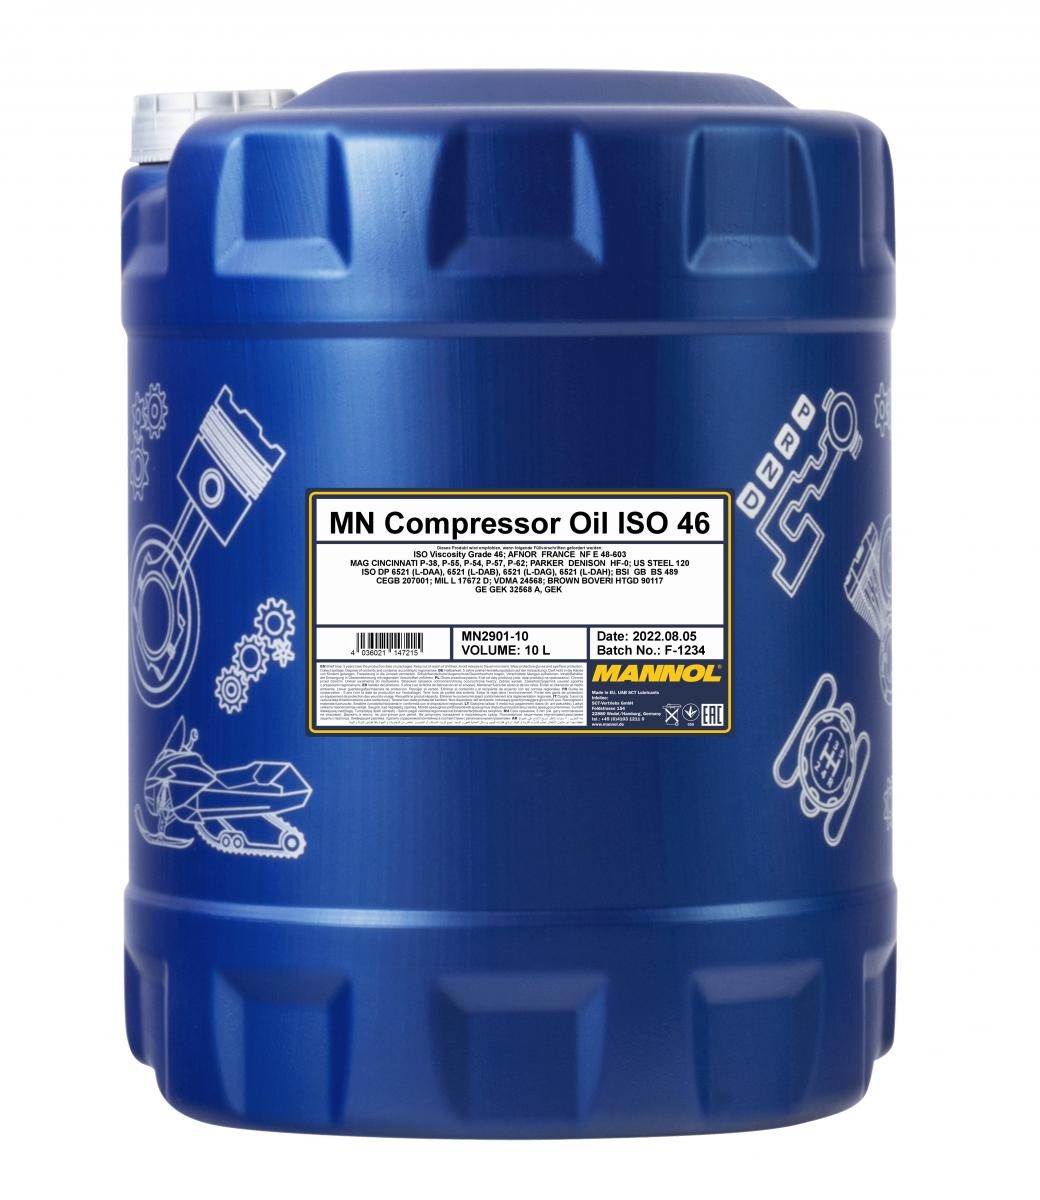 MANNOL Compressor Oil ISO 46 MN290110 Ac compressor W245 B 200 2.0 211 hp Petrol 2006 price